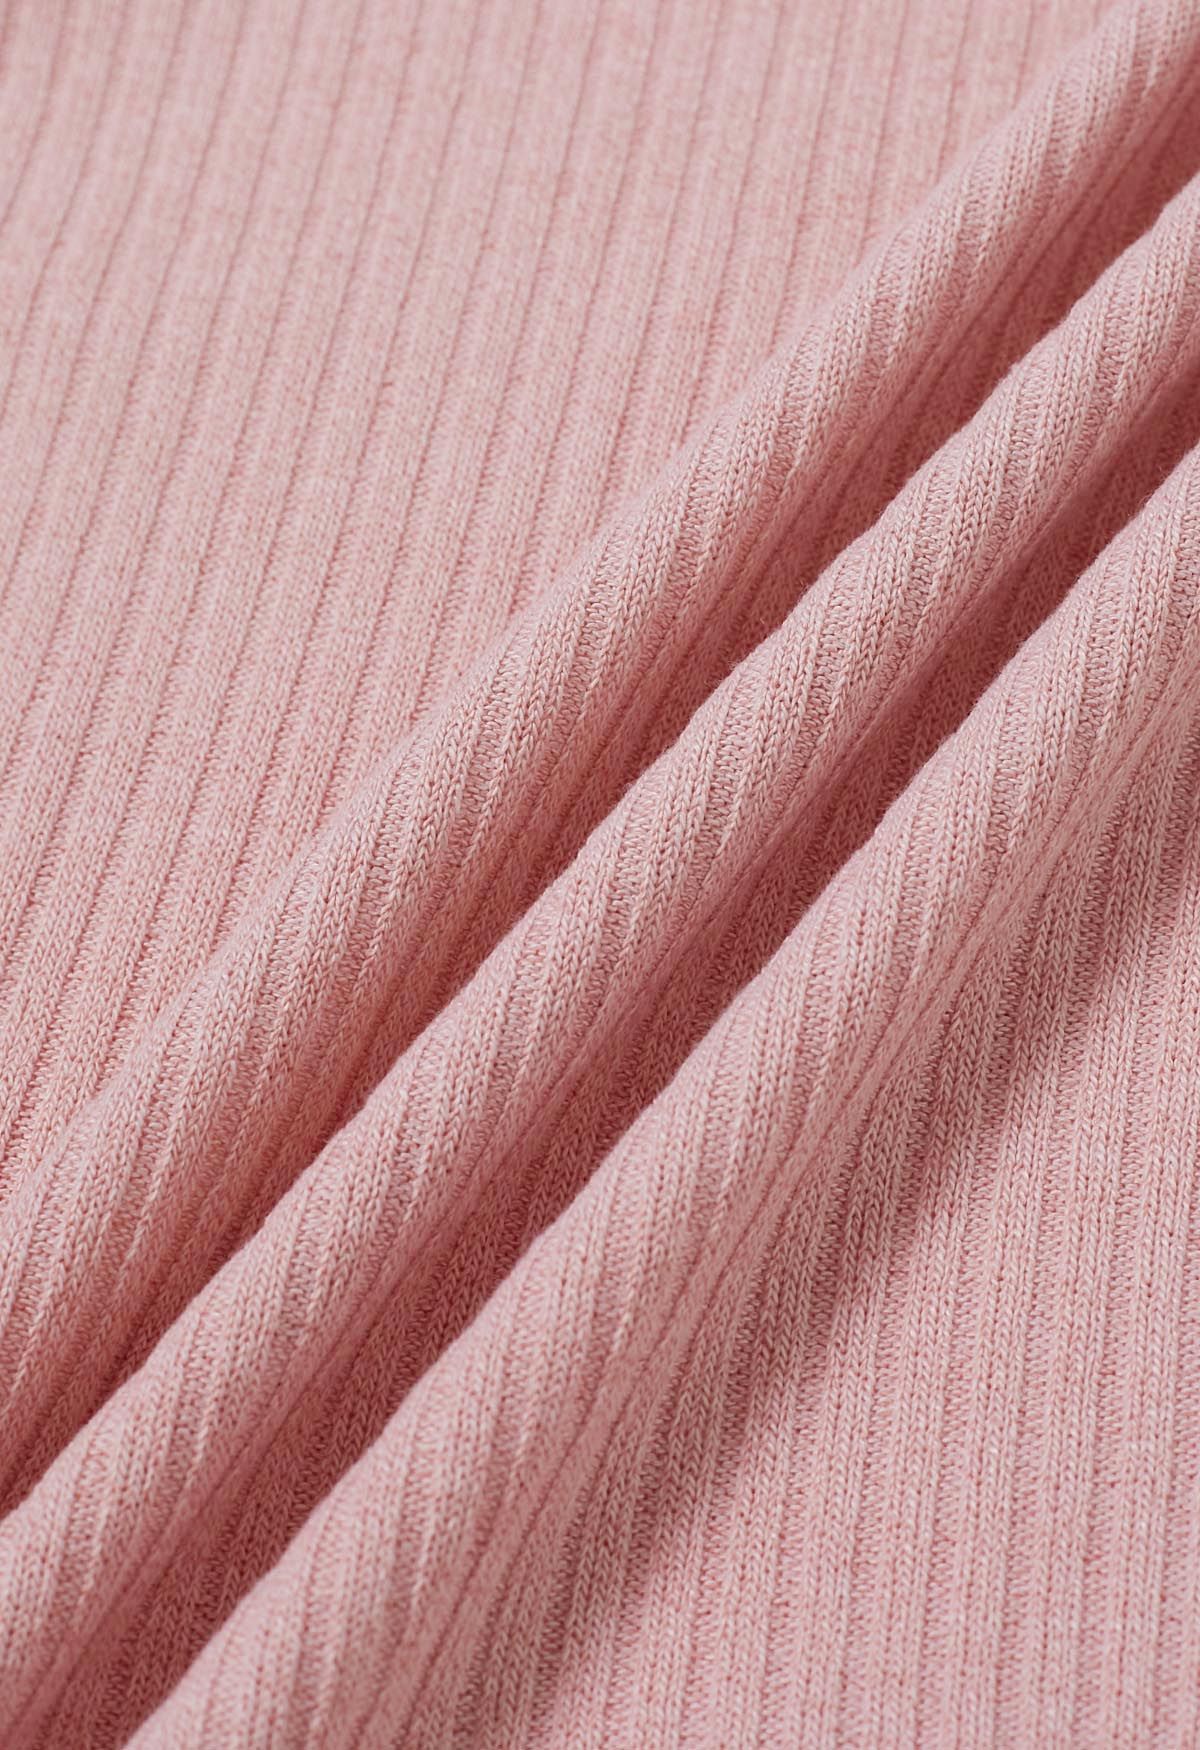 Sequin Mesh Sleeves Mock Neck Knit Top in Pink